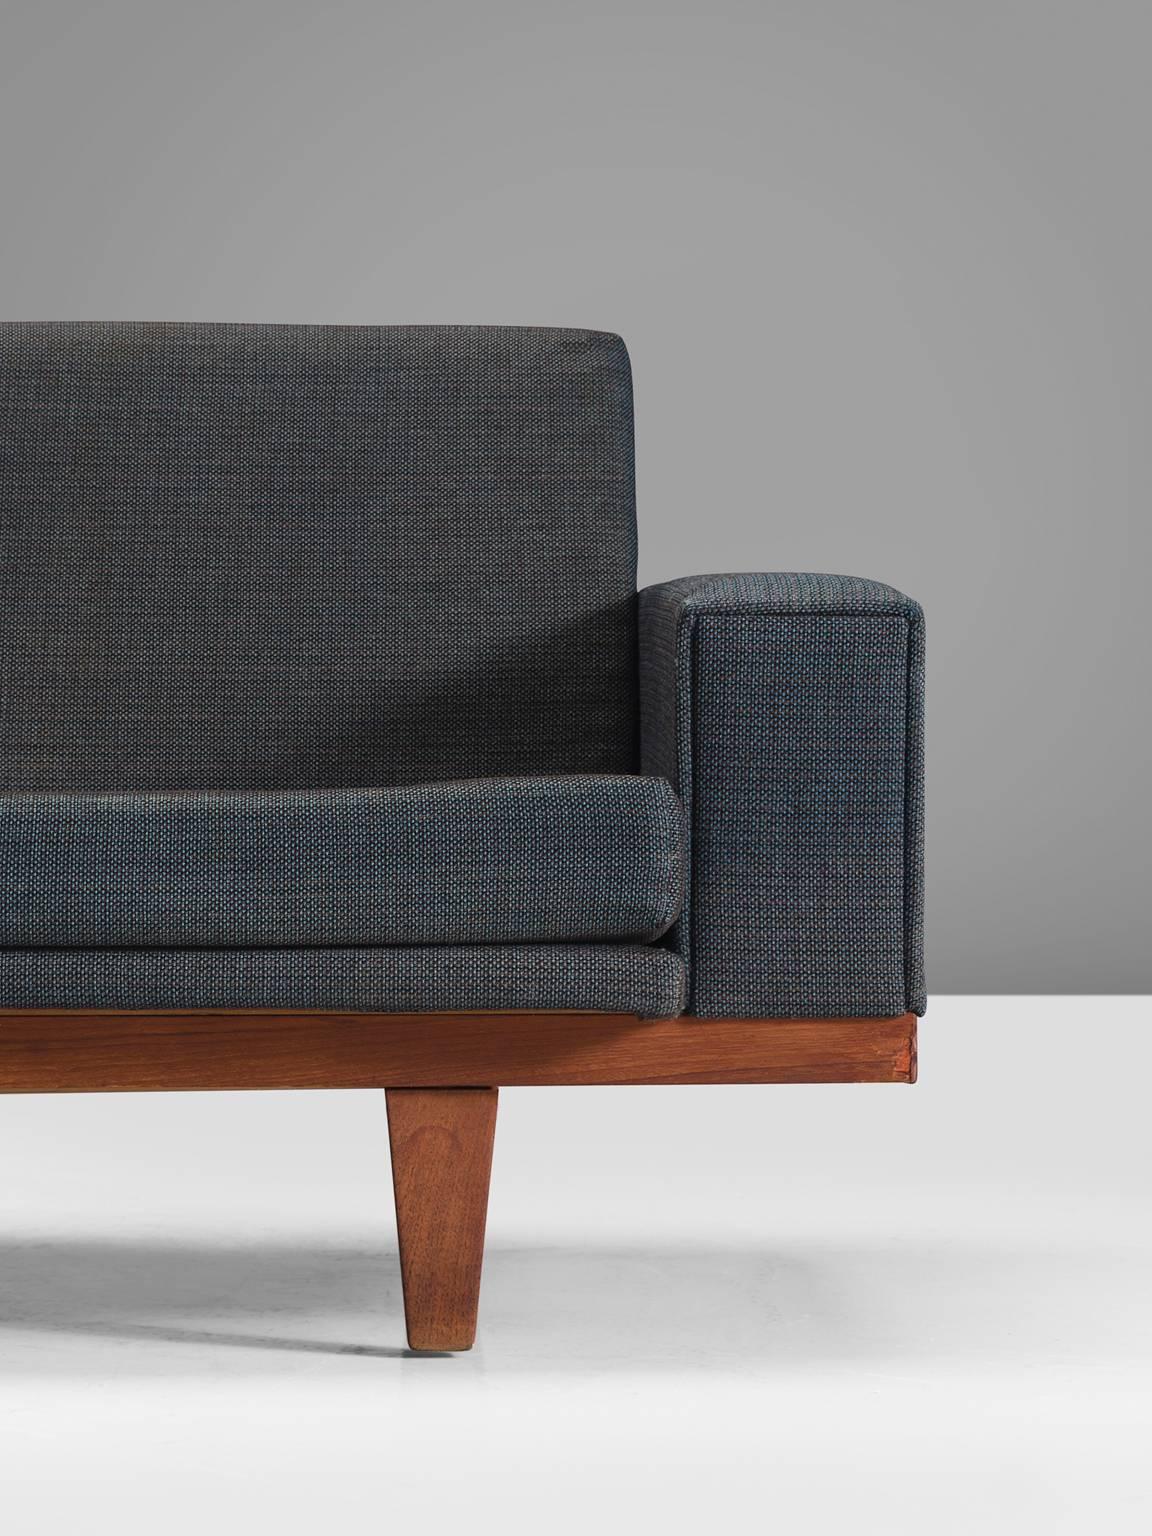 Fabric Danish Four-Seat Sofa with Teak Frame